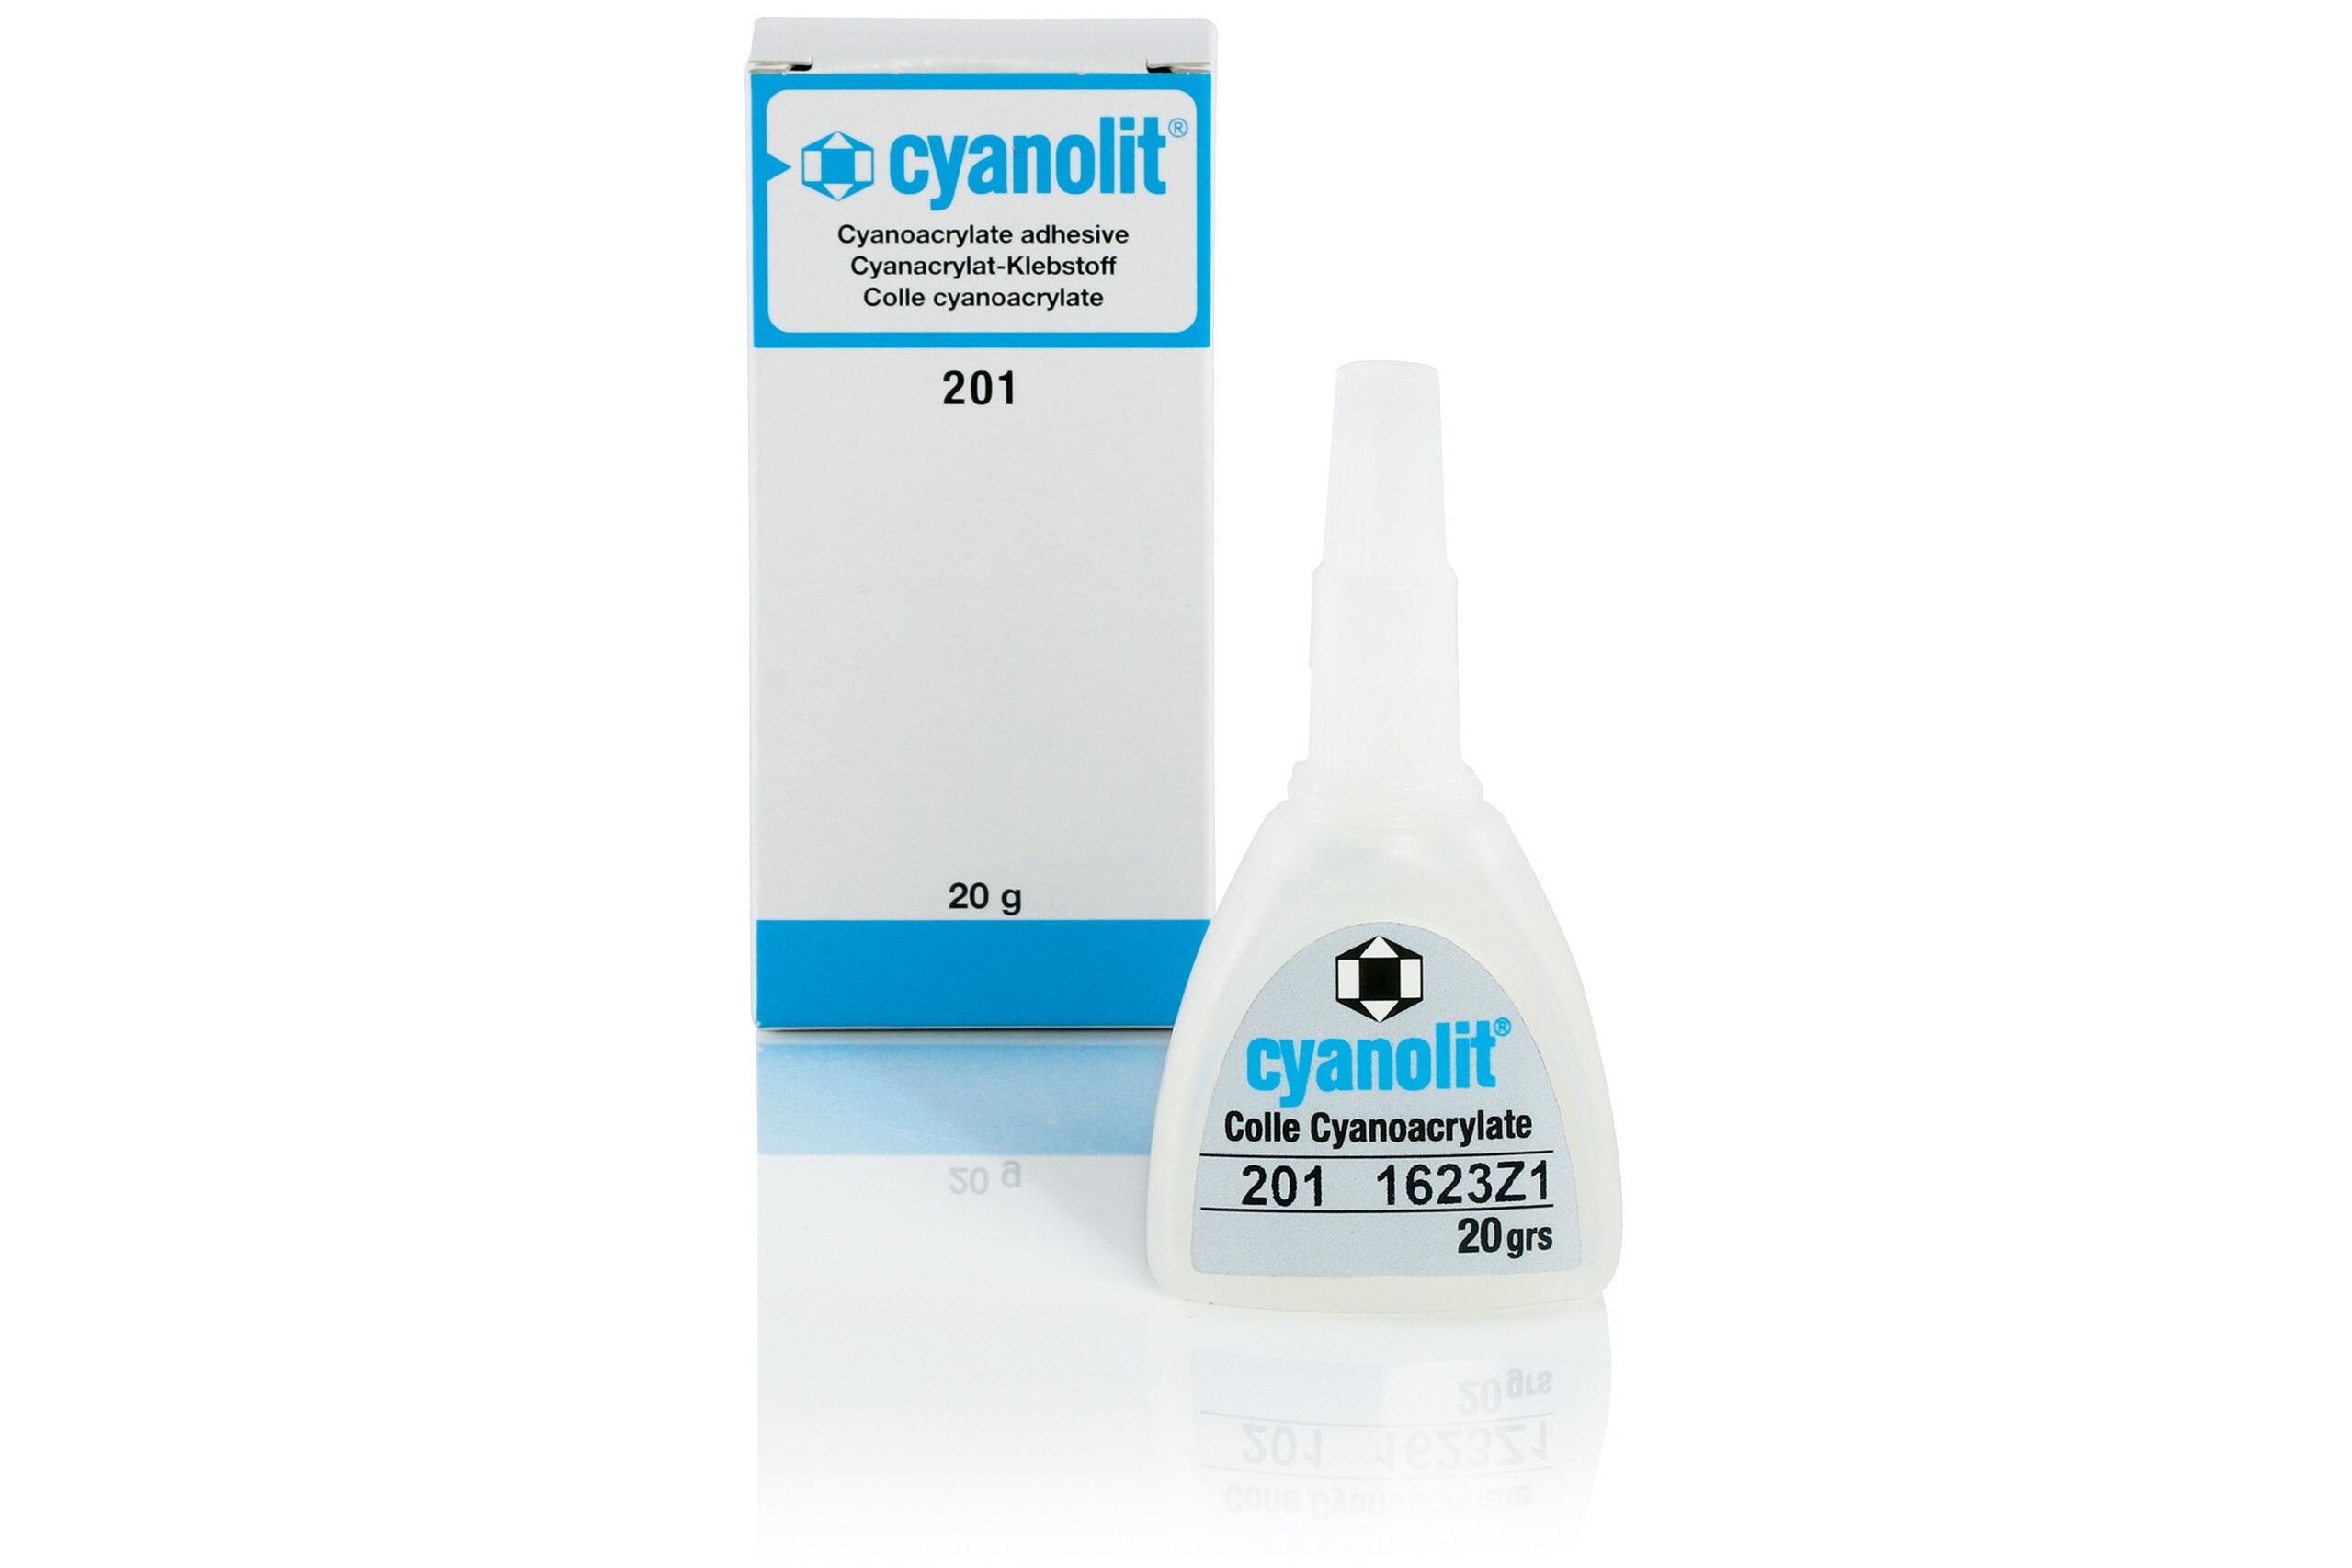 Un flacon de 20 g de Cyanolit